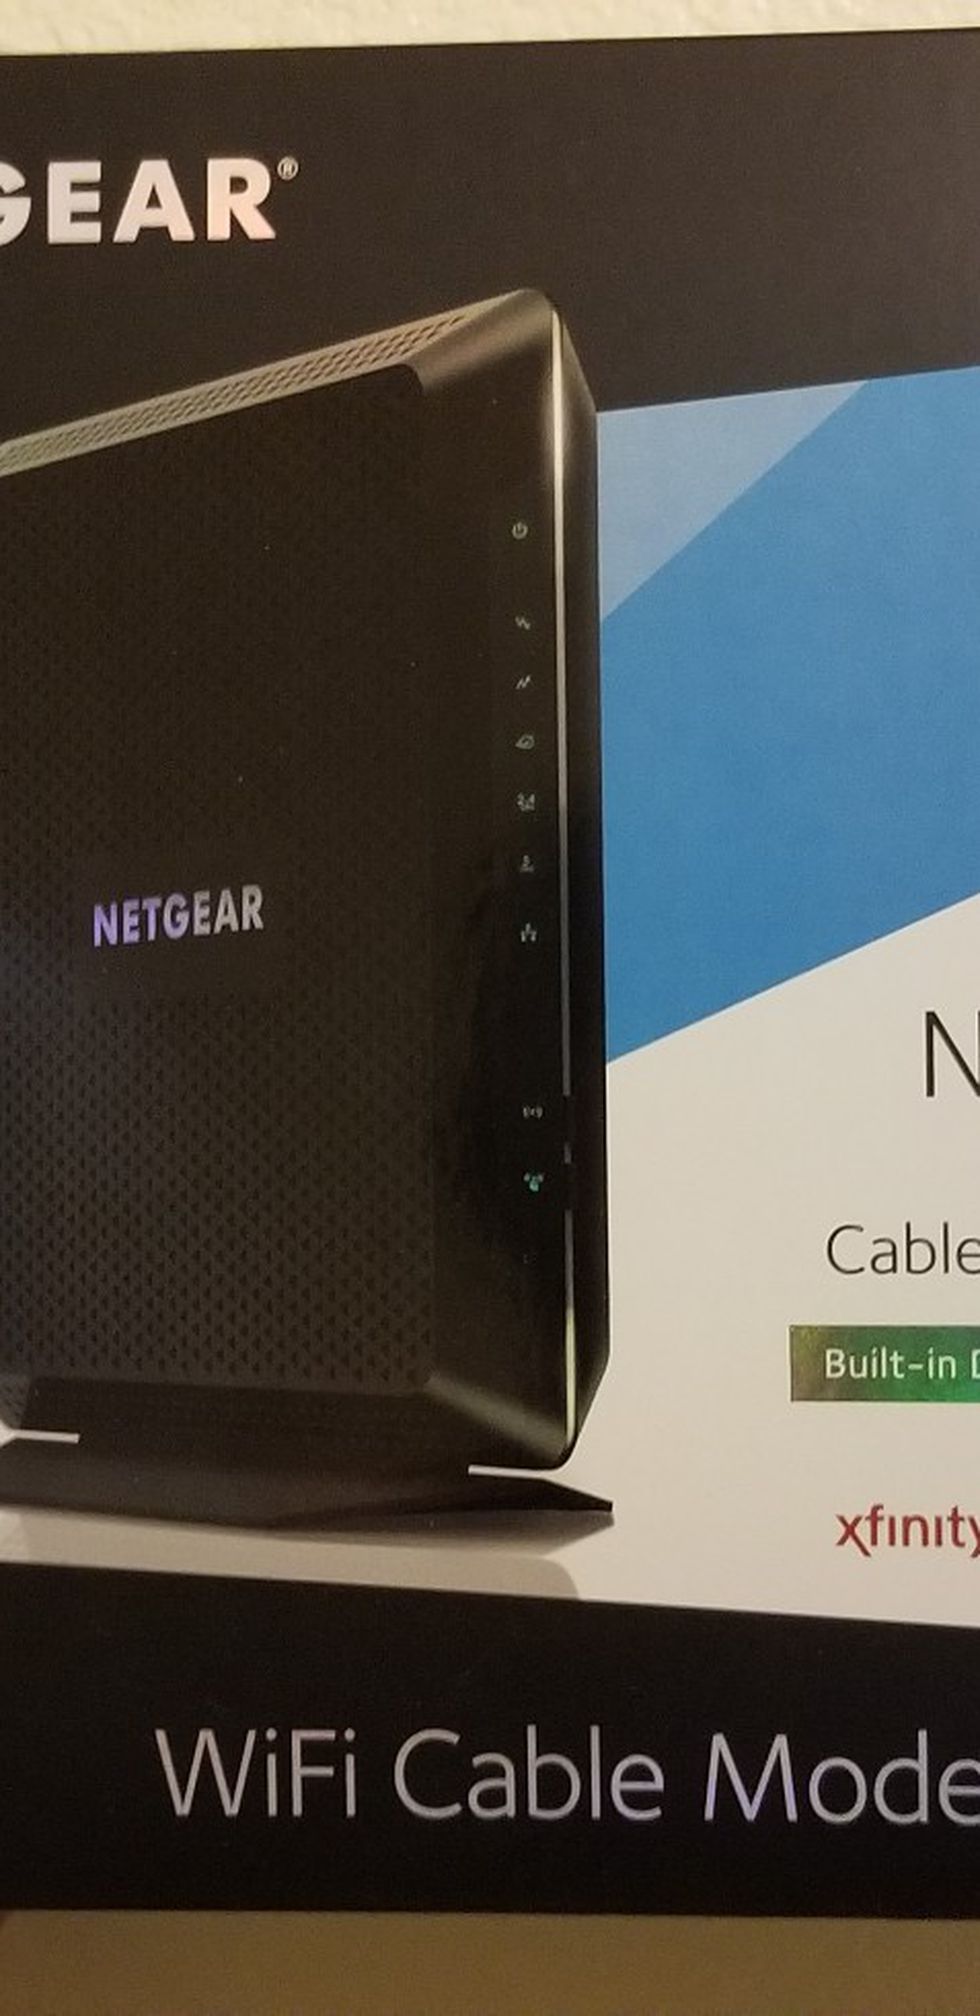 Netgear nighthawk AC1900 wifi cable modem router